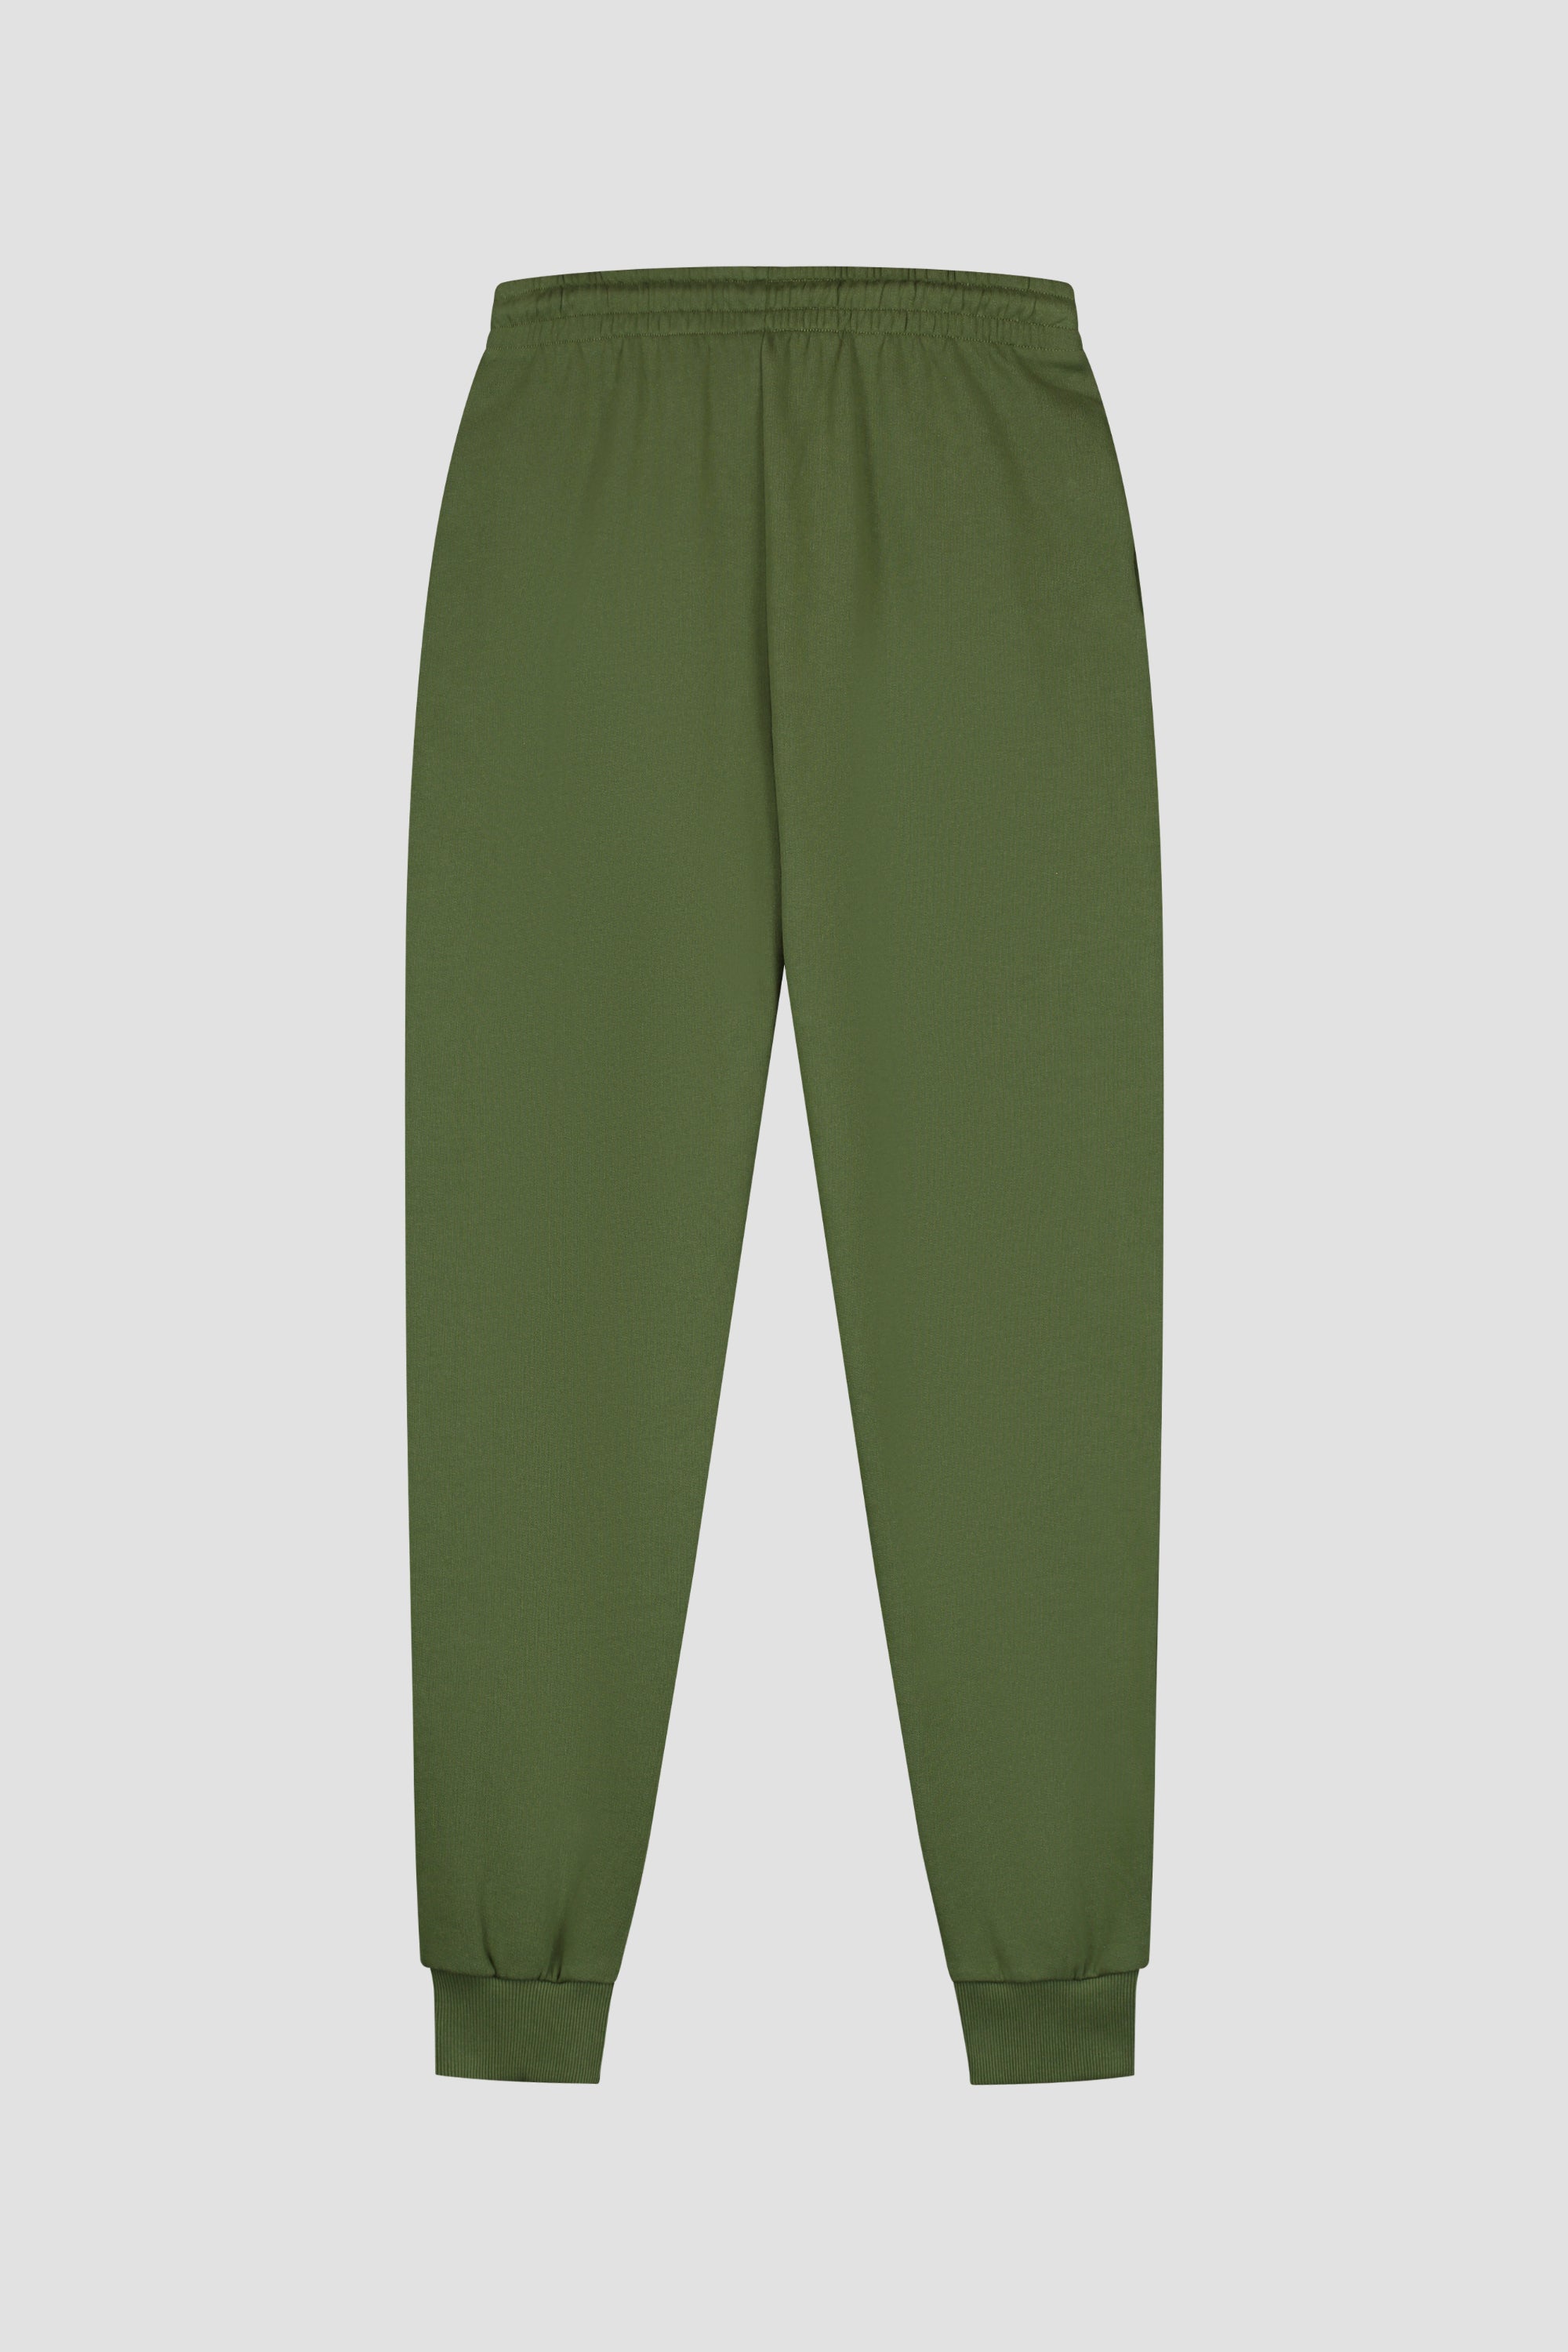 ØLÅF WMN Sweatpants - Army Green